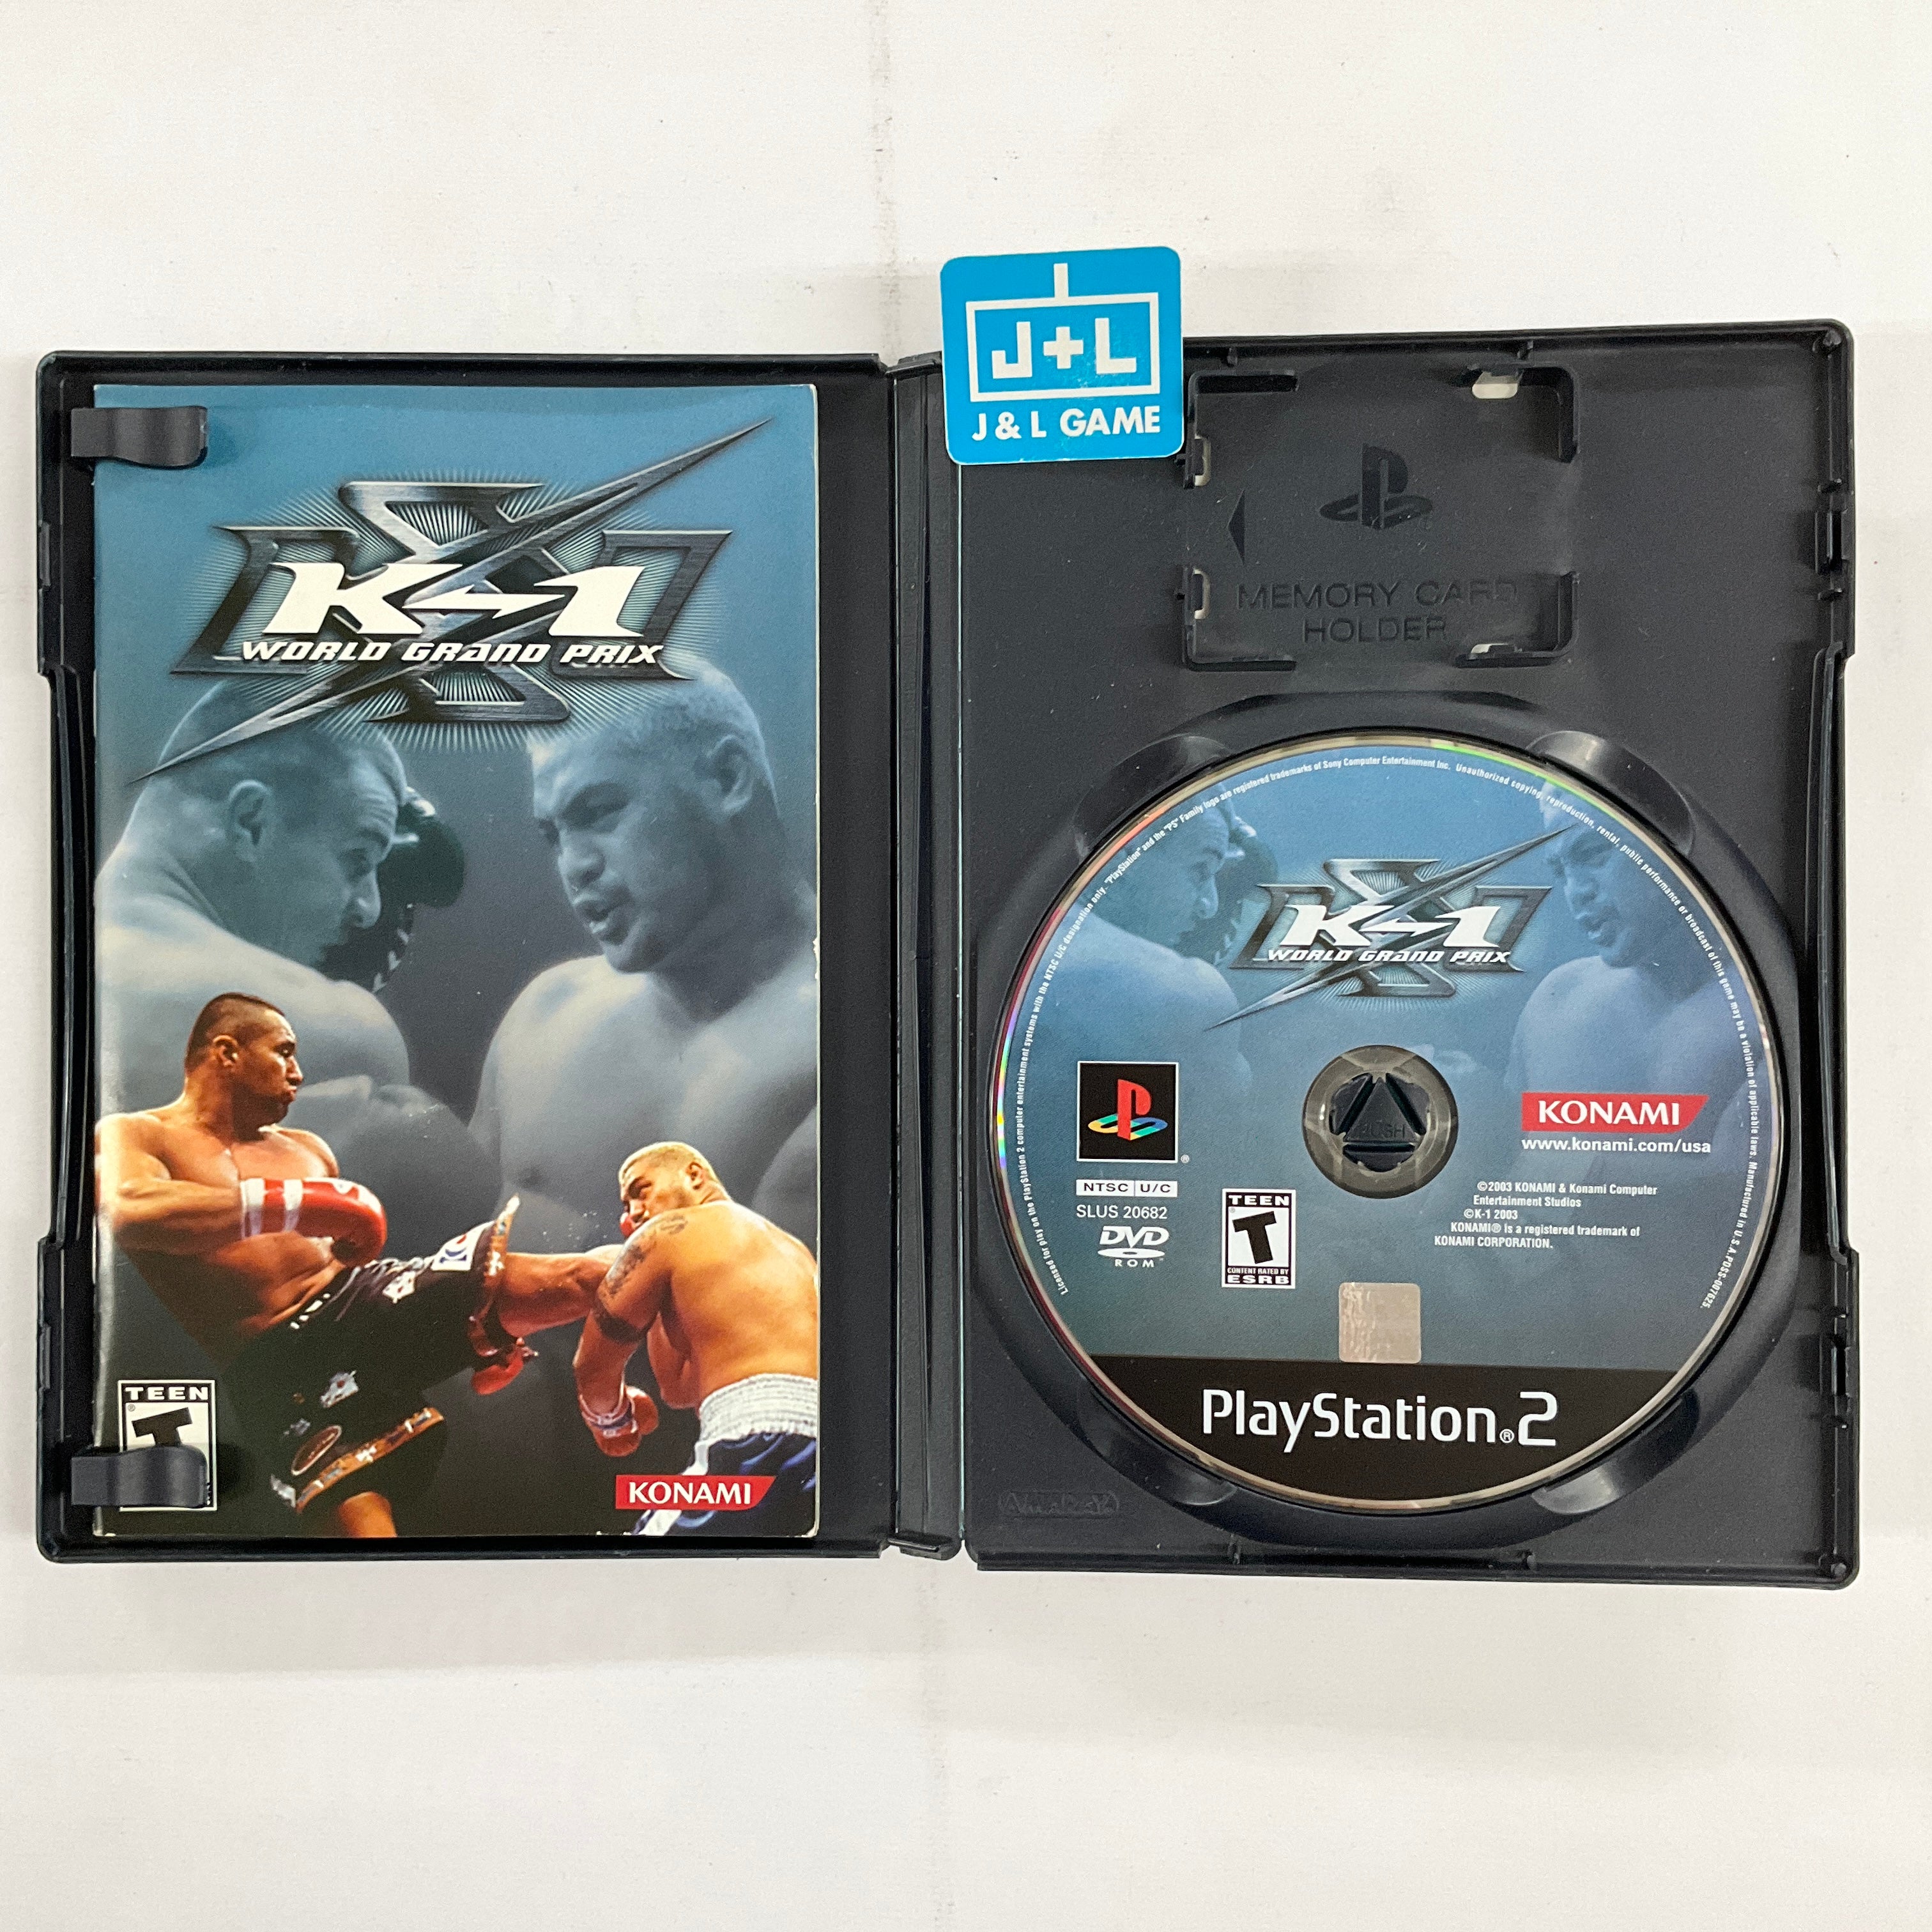 K-1 World Grand Prix - (PS2) Playstation 2 [Pre-Owned] Video Games Konami   